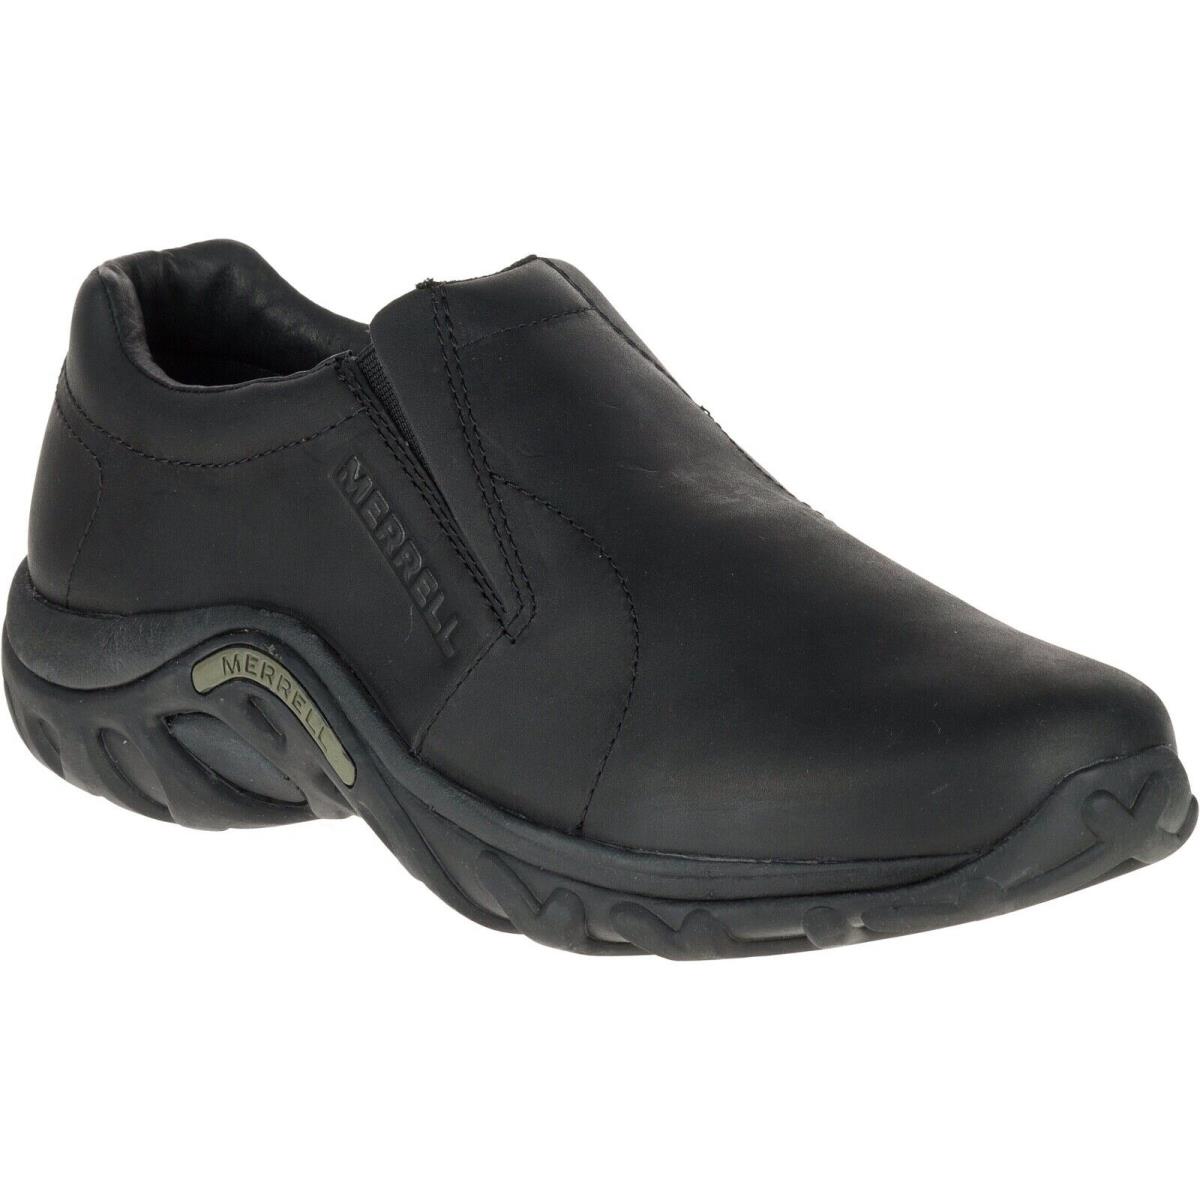 Mens Merrell Jungle Moc Leather Slip On Shoes Size 7.5 Midnight Black J60889